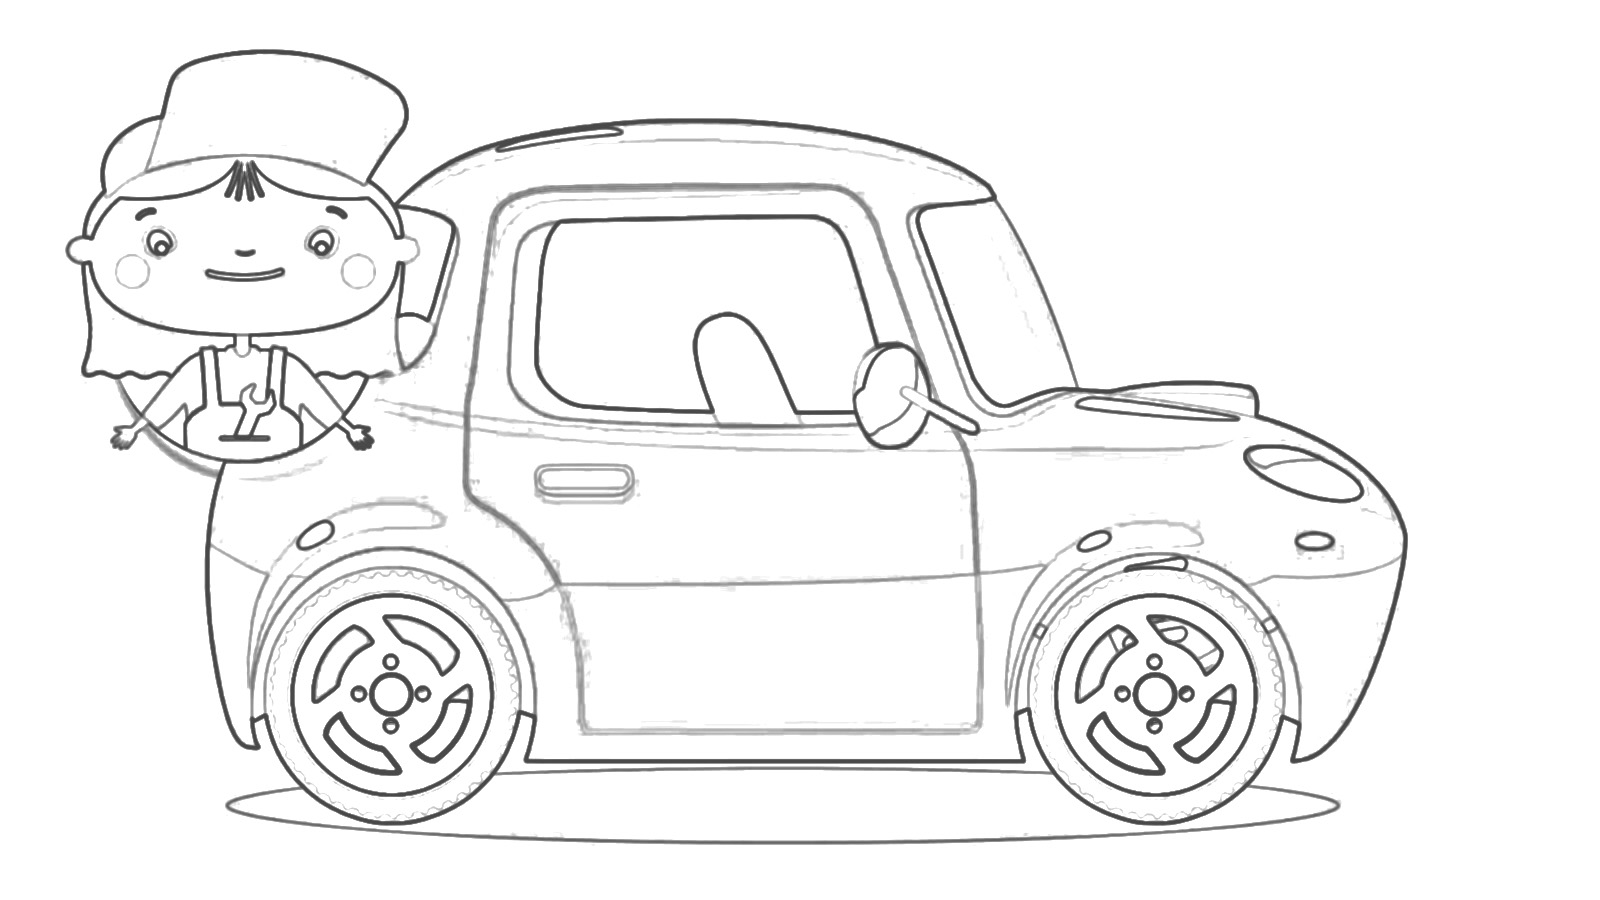 Doctor mashinkov and a car